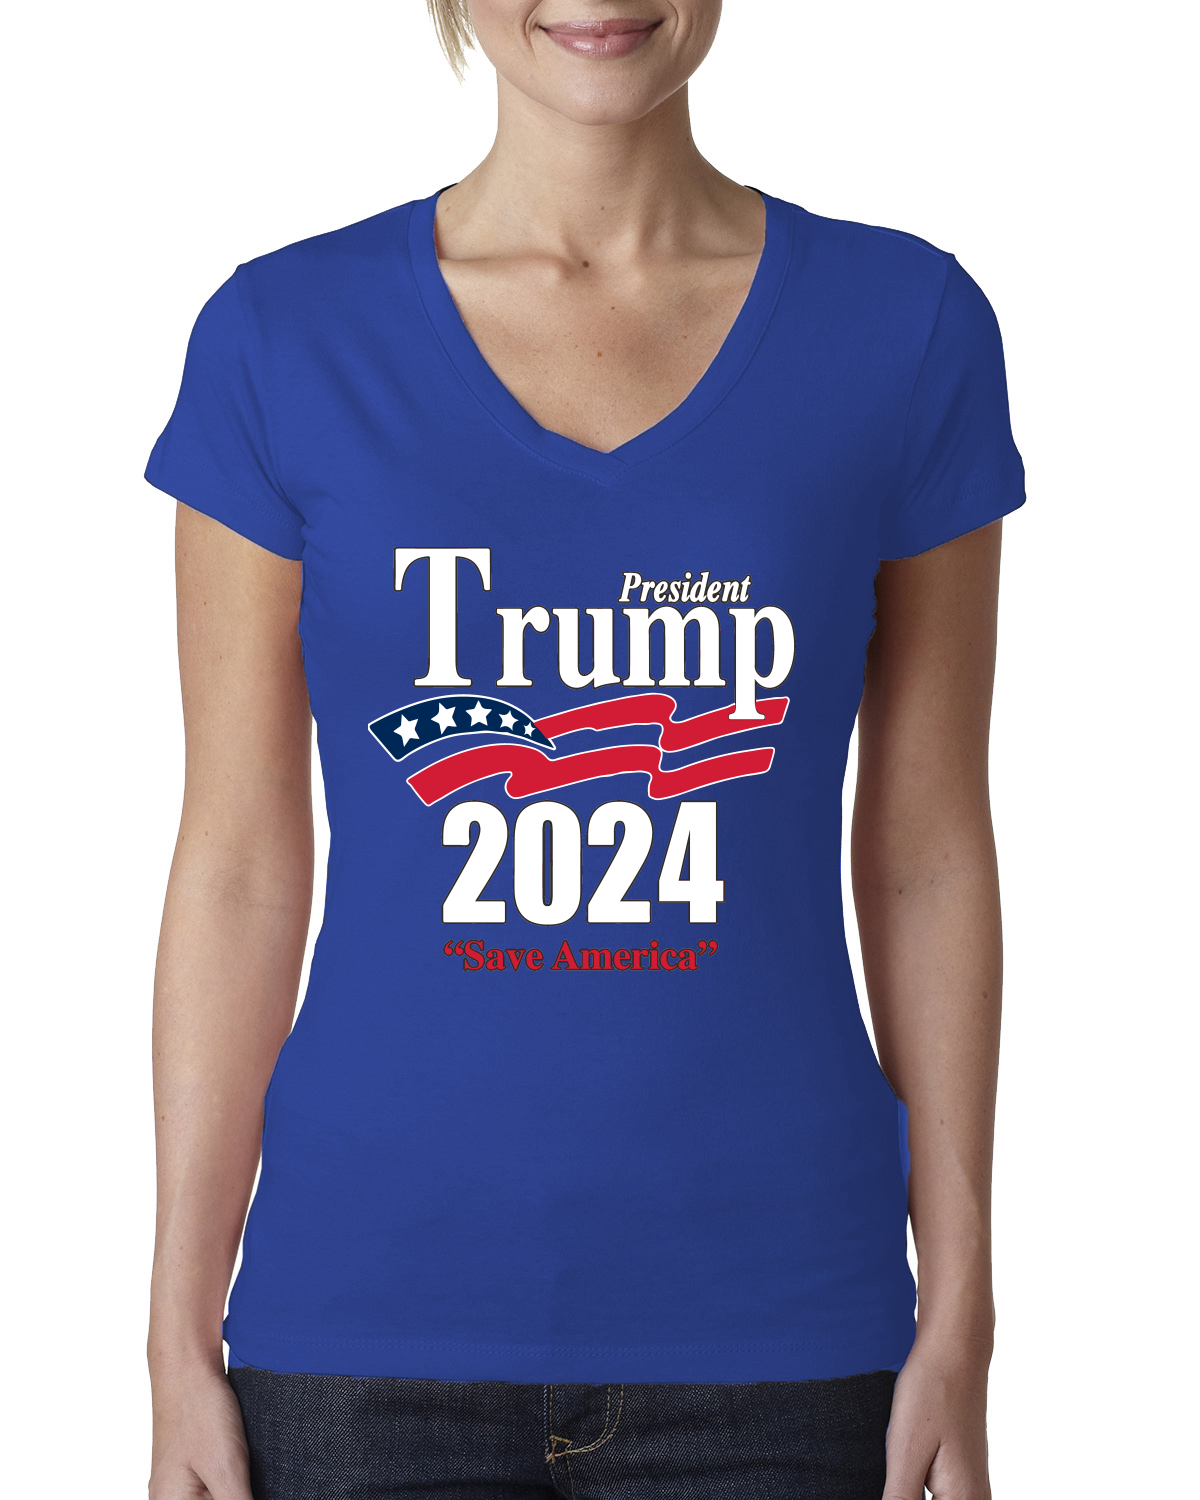 Trump 2024 Shirt Save America Political Women Junior VNeck Tee eBay